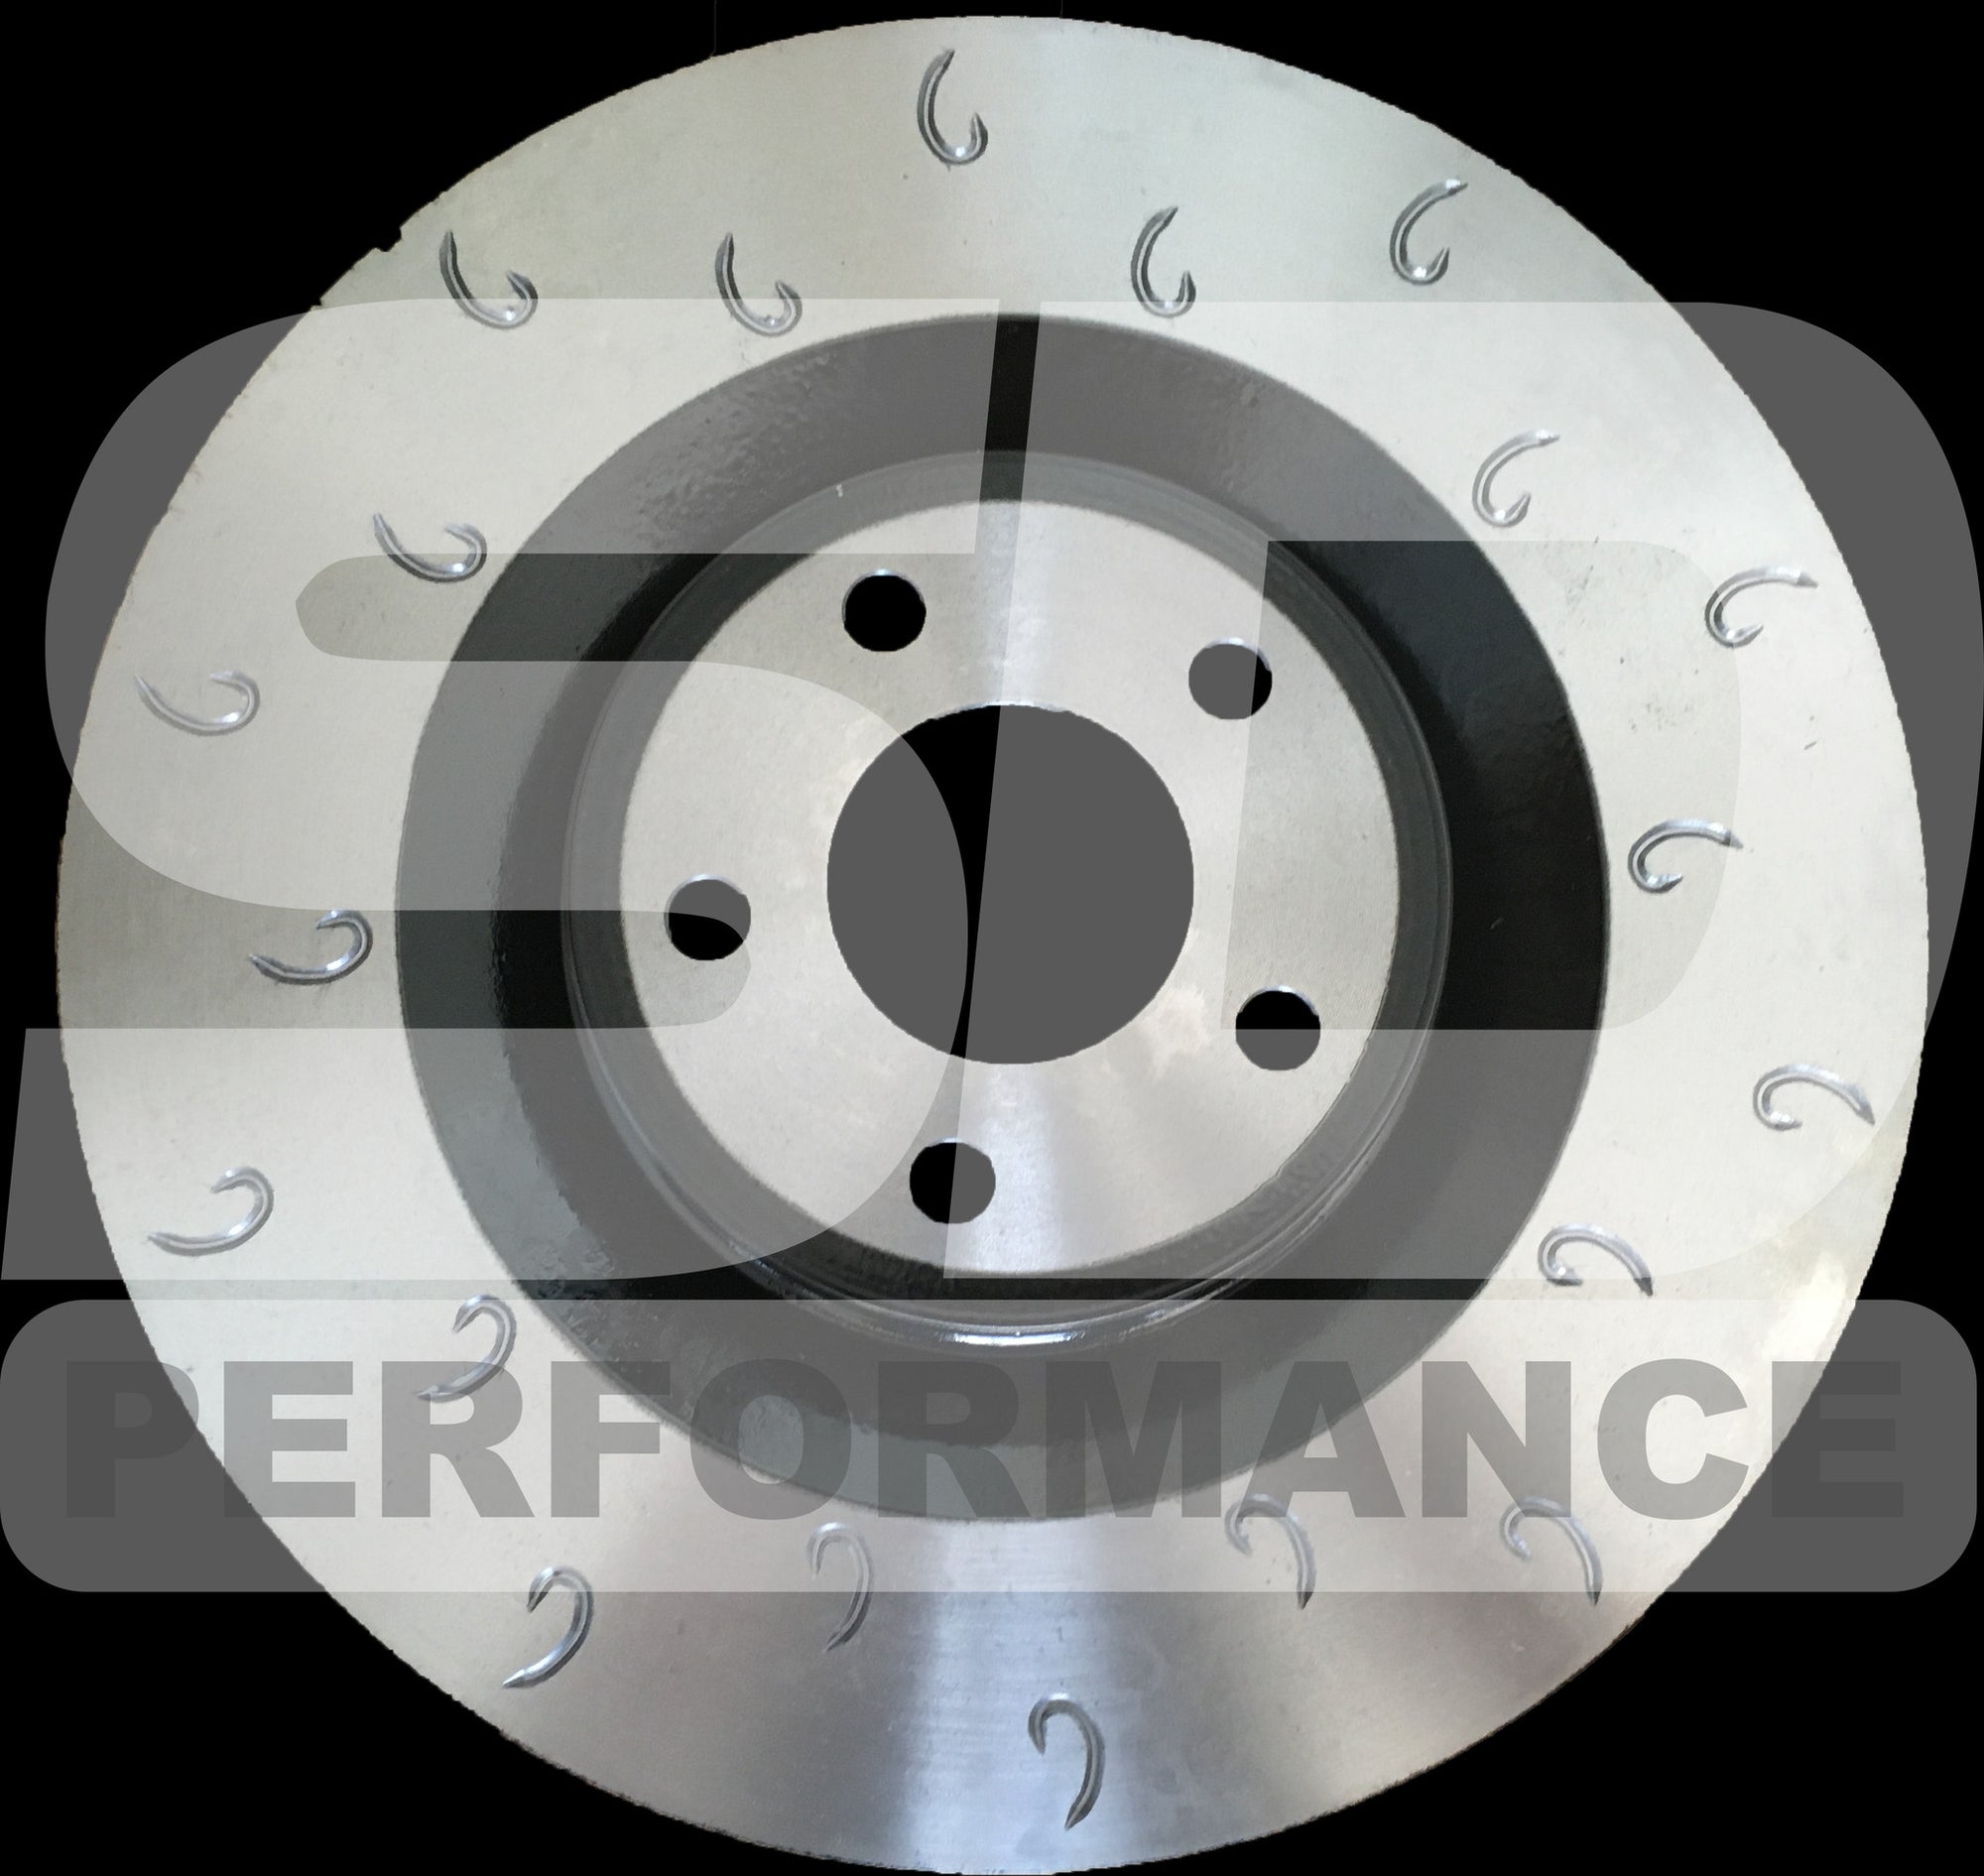 Focus MK3 RS Front Performance discs - J-Hook